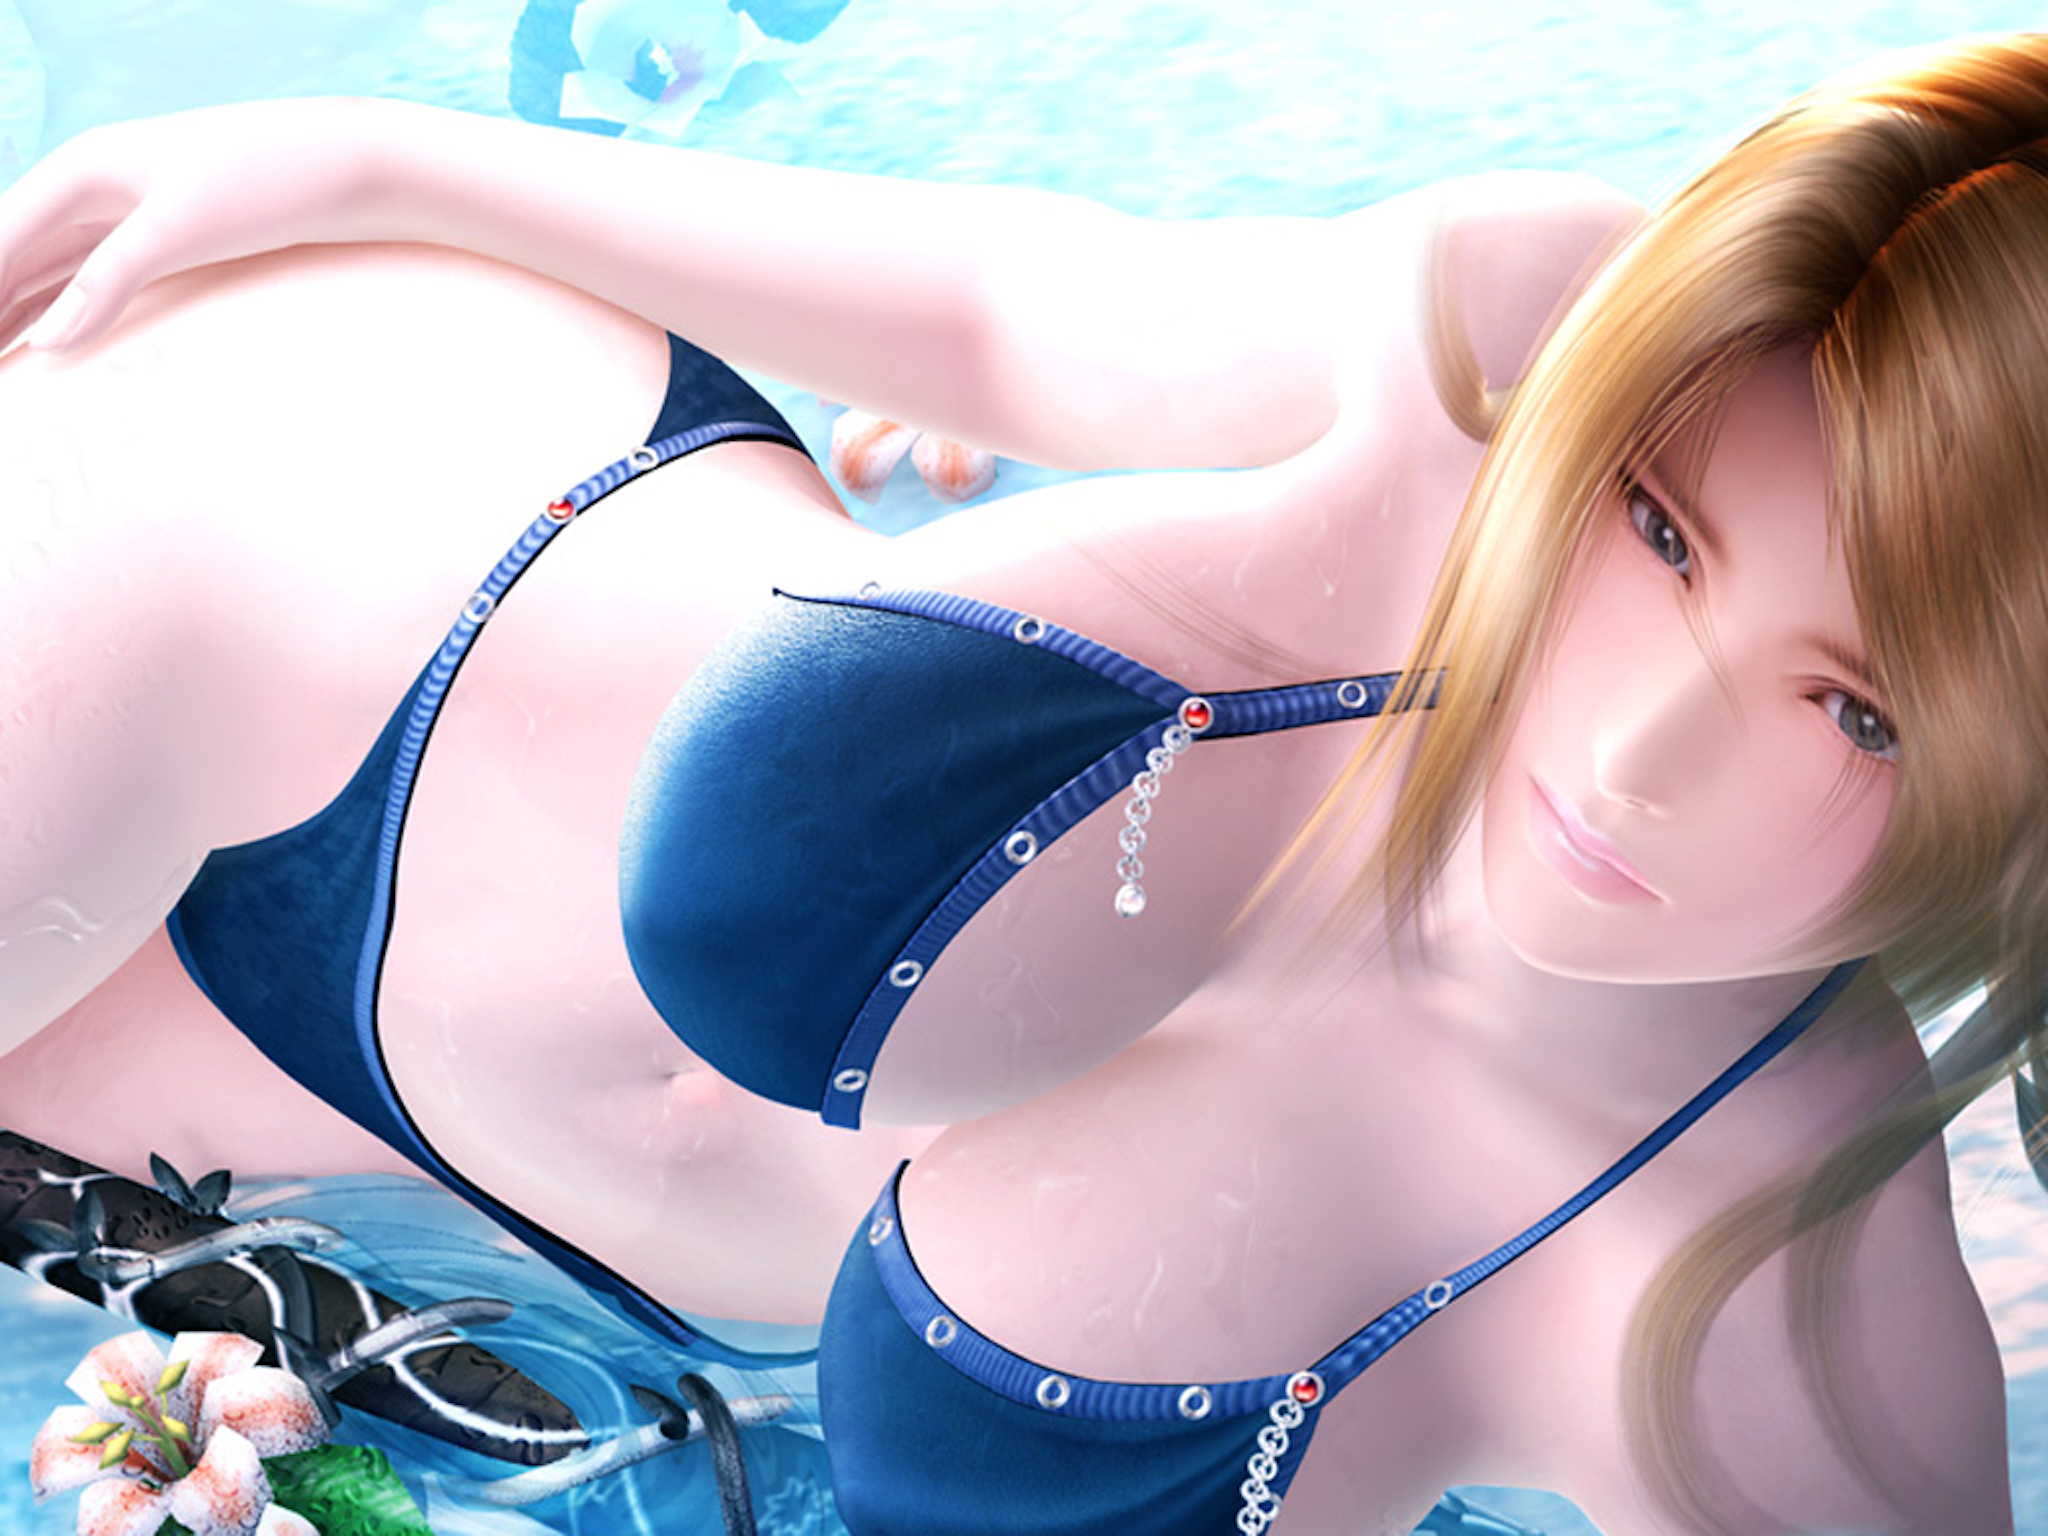 Sexy Beach 2-Blue Bikini Wallpaper | Cool HD Game Backgrounds